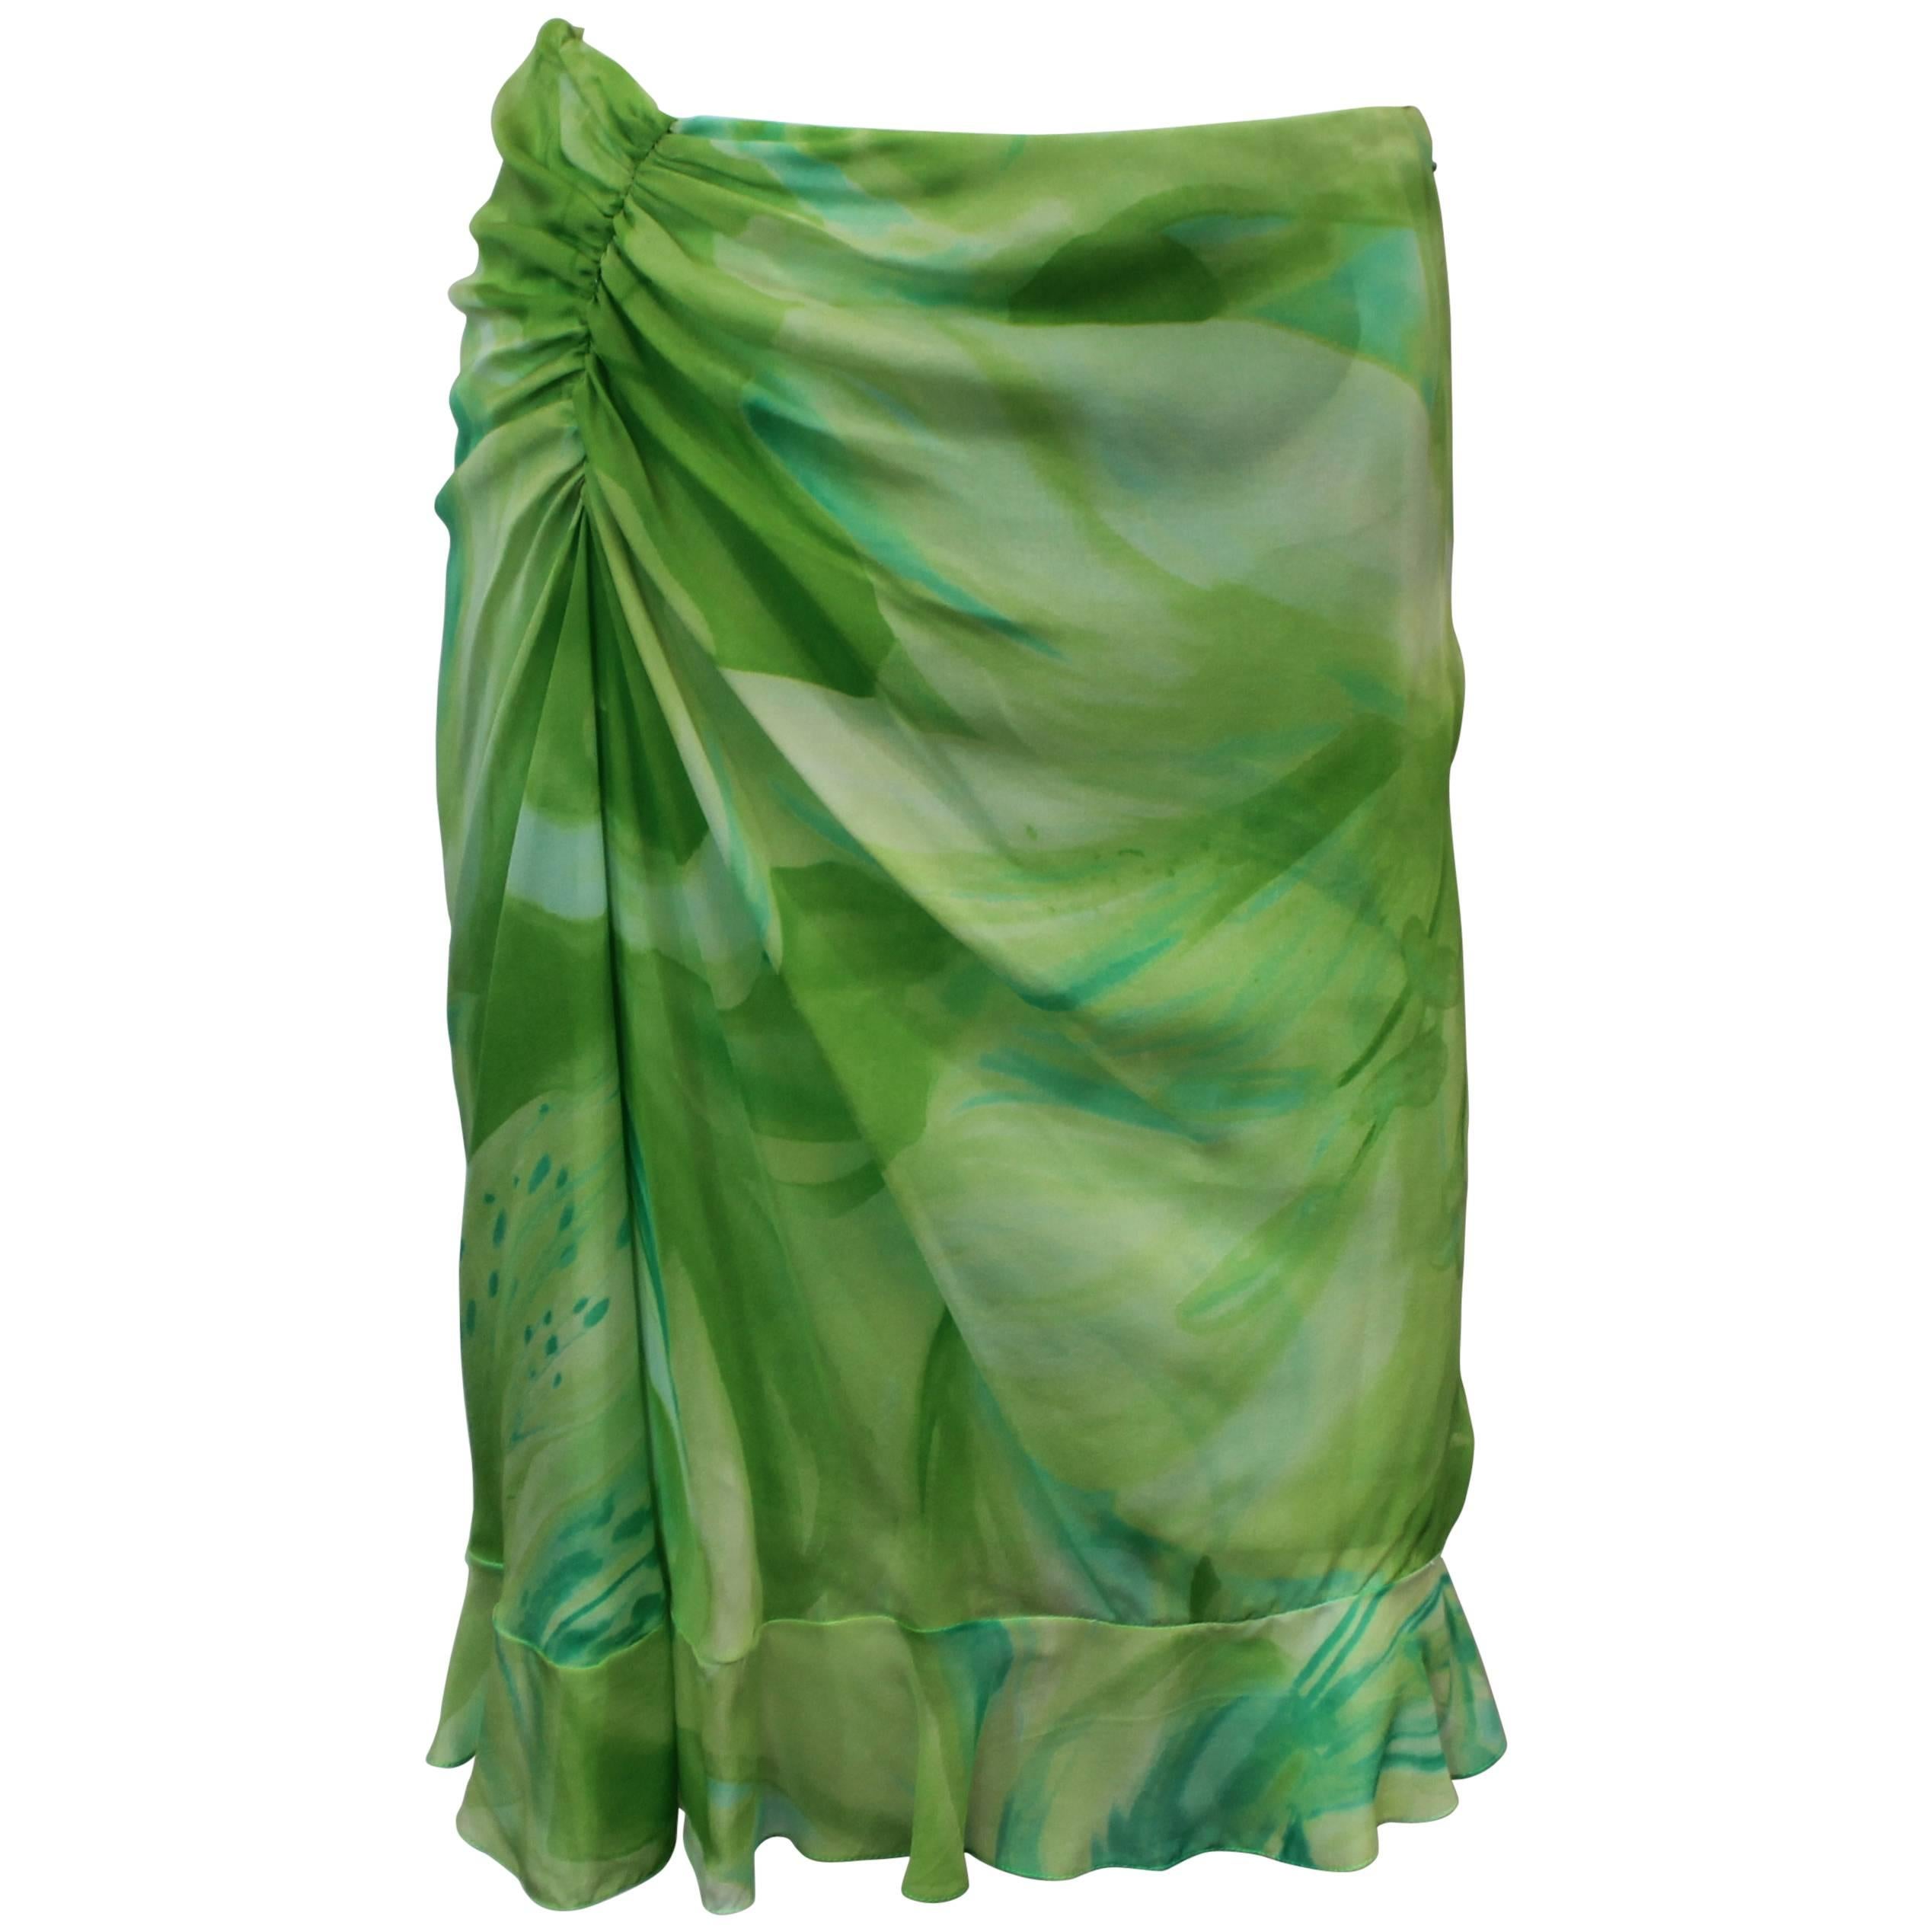 Oscar de la Renta Green Watercolor-Like Floral Printed Silk Chiffon Skirt 